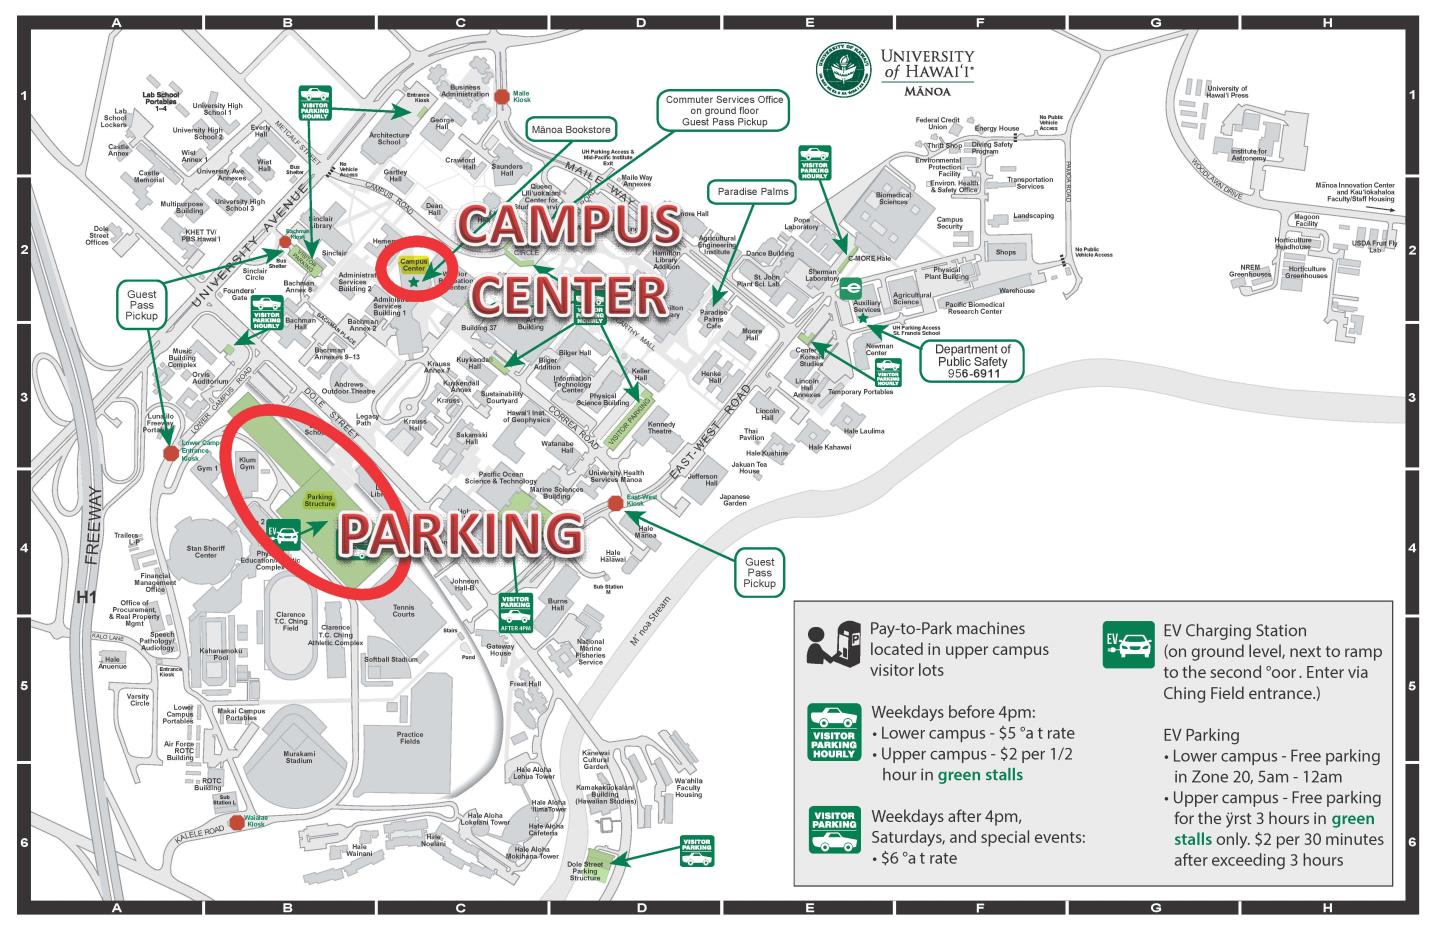 Map of University of Hawaii, Manoa Campus Center